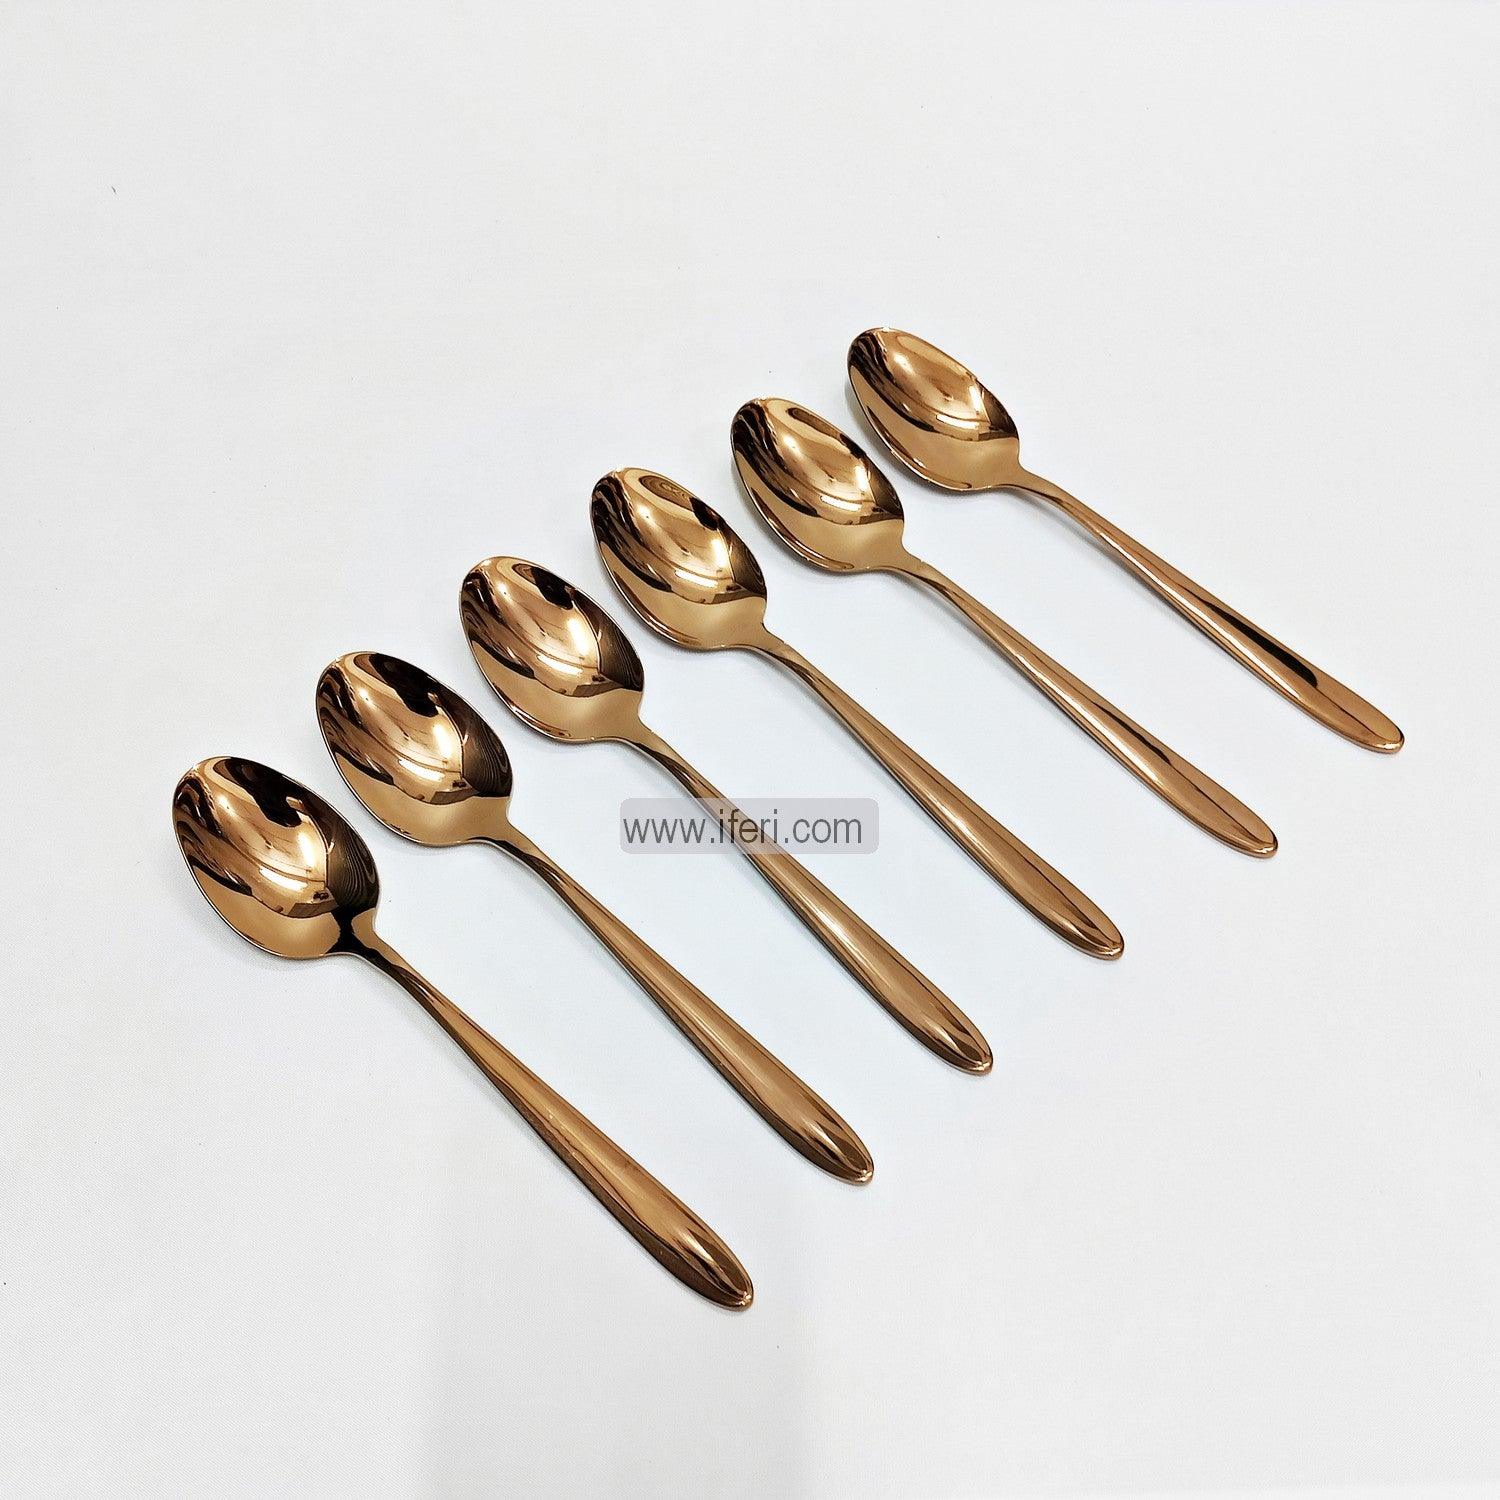 6 Pcs 8 inch Stainless Steel Copper Dinner Spoon Set EB9144 Price in Bangladesh - iferi.com